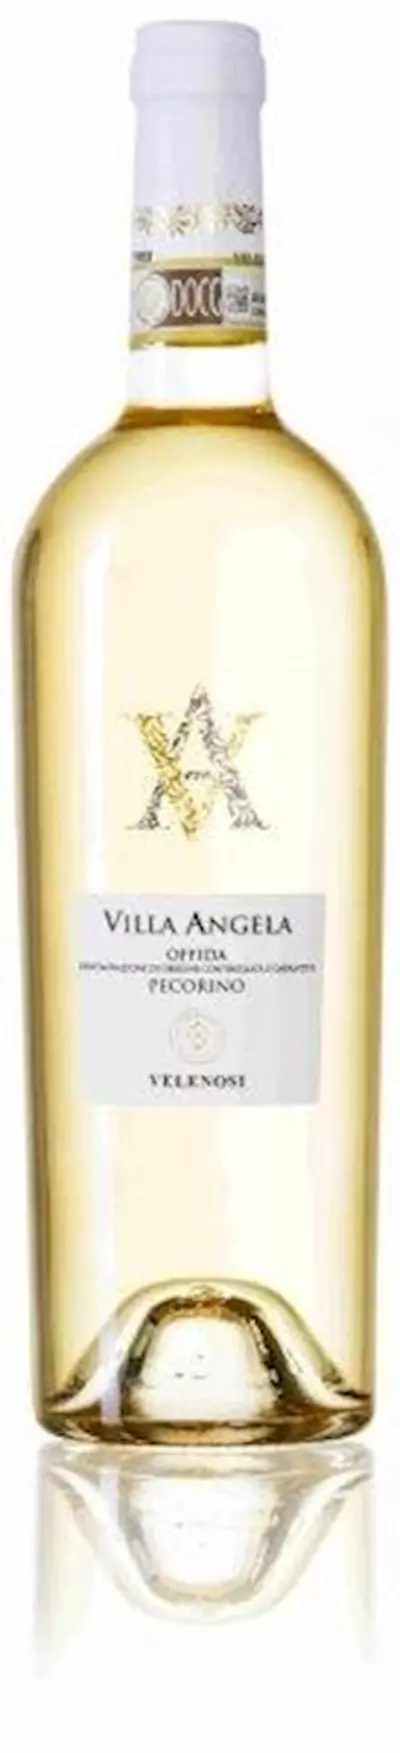 Villa Angela - Offida Docg Pecorino